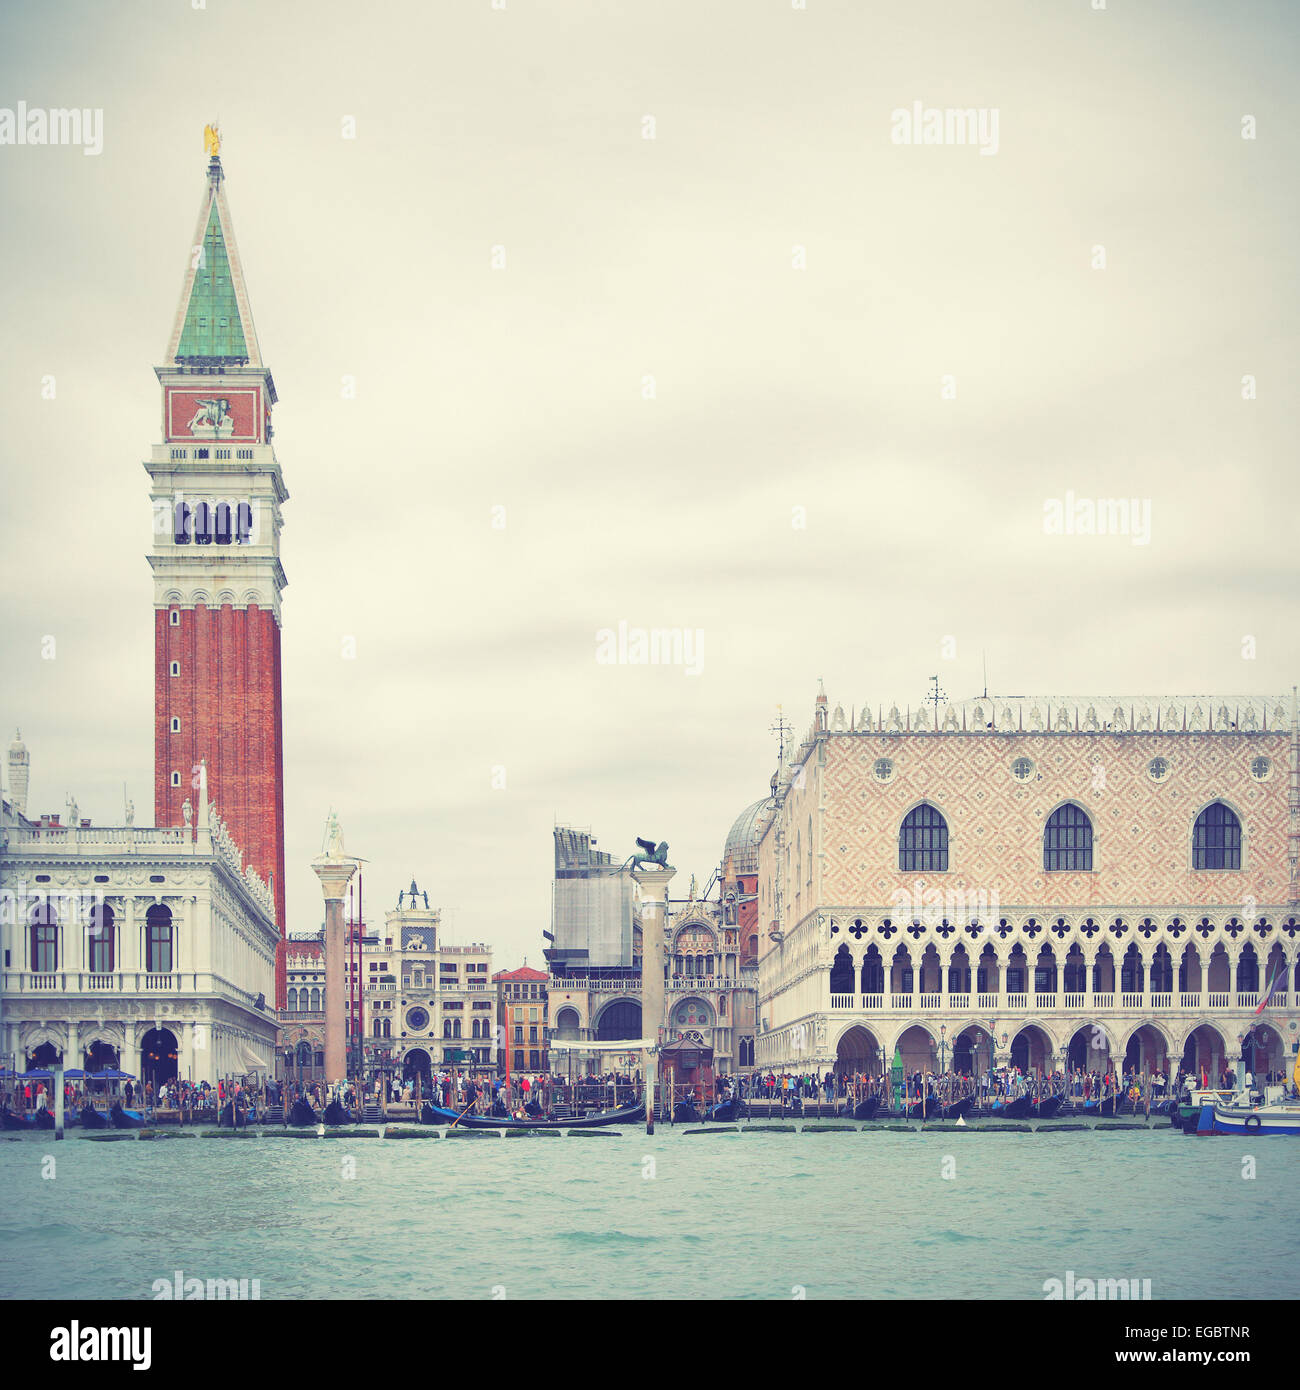 Campanile und Dogenpalast, Venedig, Italien. Retro-Stil vorgefiltert Stockfoto